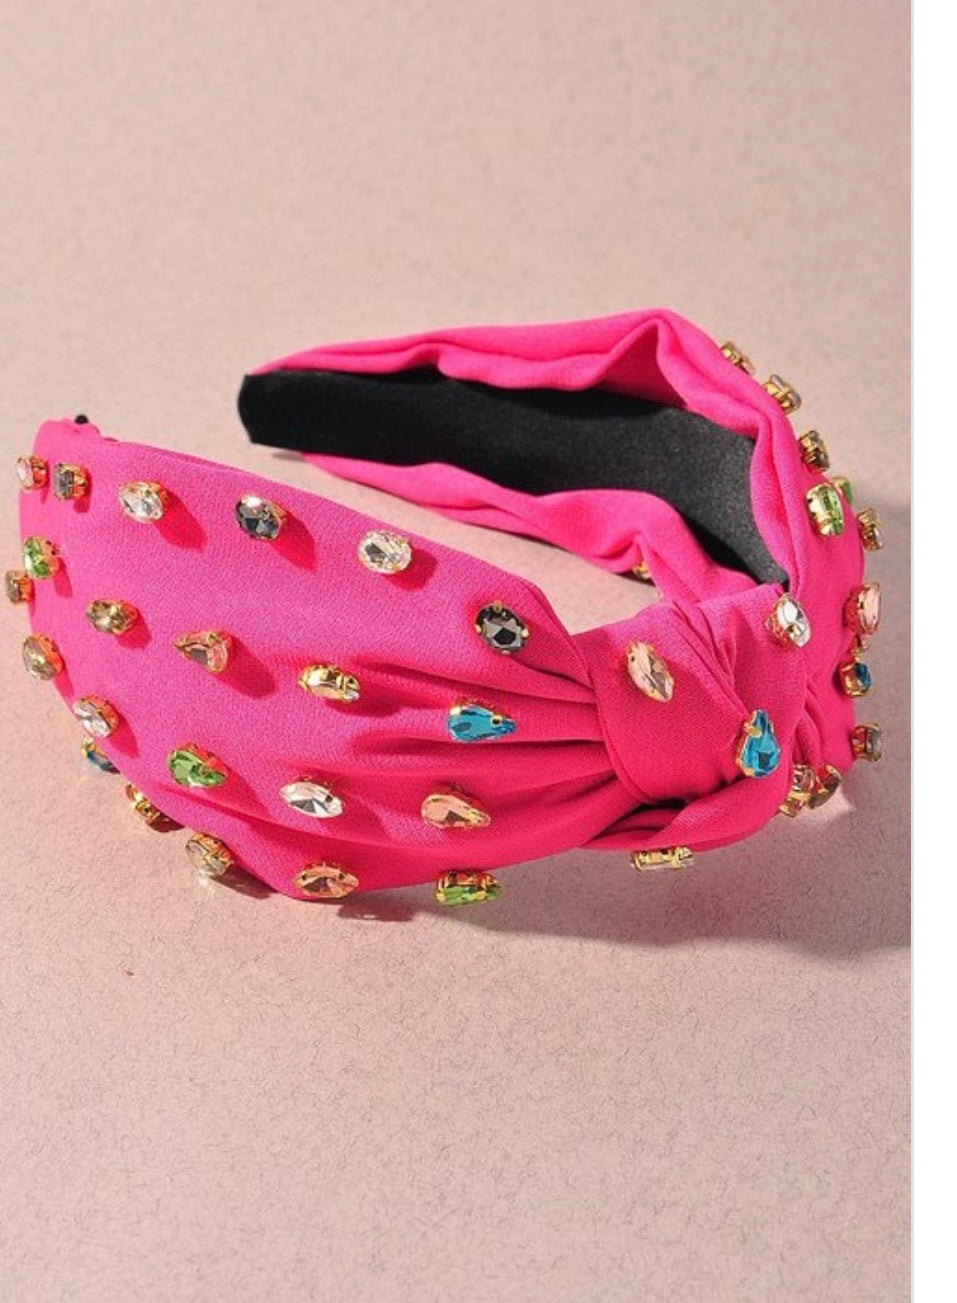 Jeweled pink headband